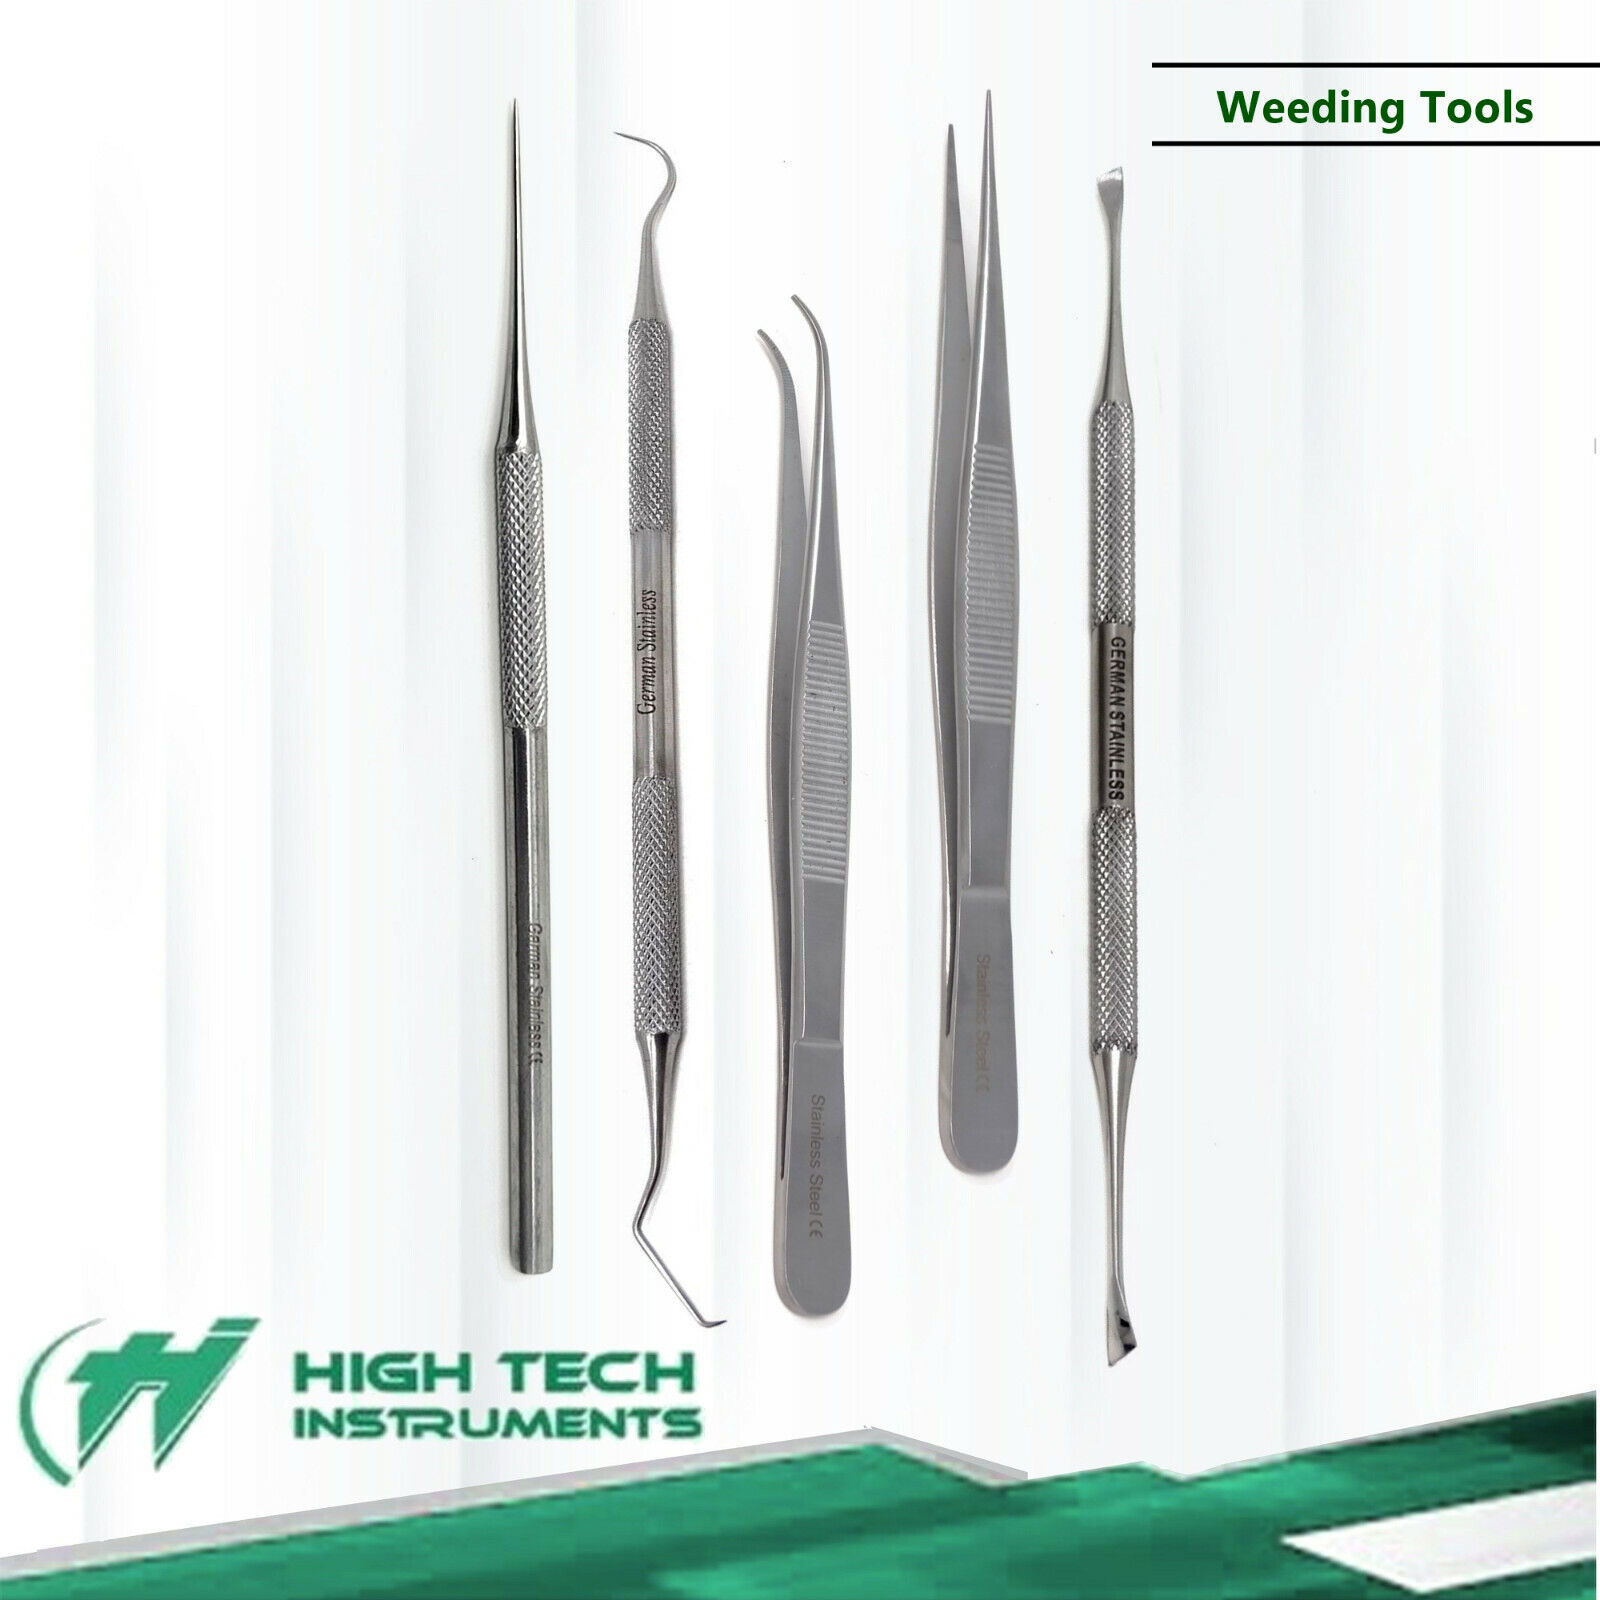 Craft Weeding Vinyl Basic Tool Set Precision Stainless Steel Crafting Tools Kit hti brand Does Not Apply - фотография #2